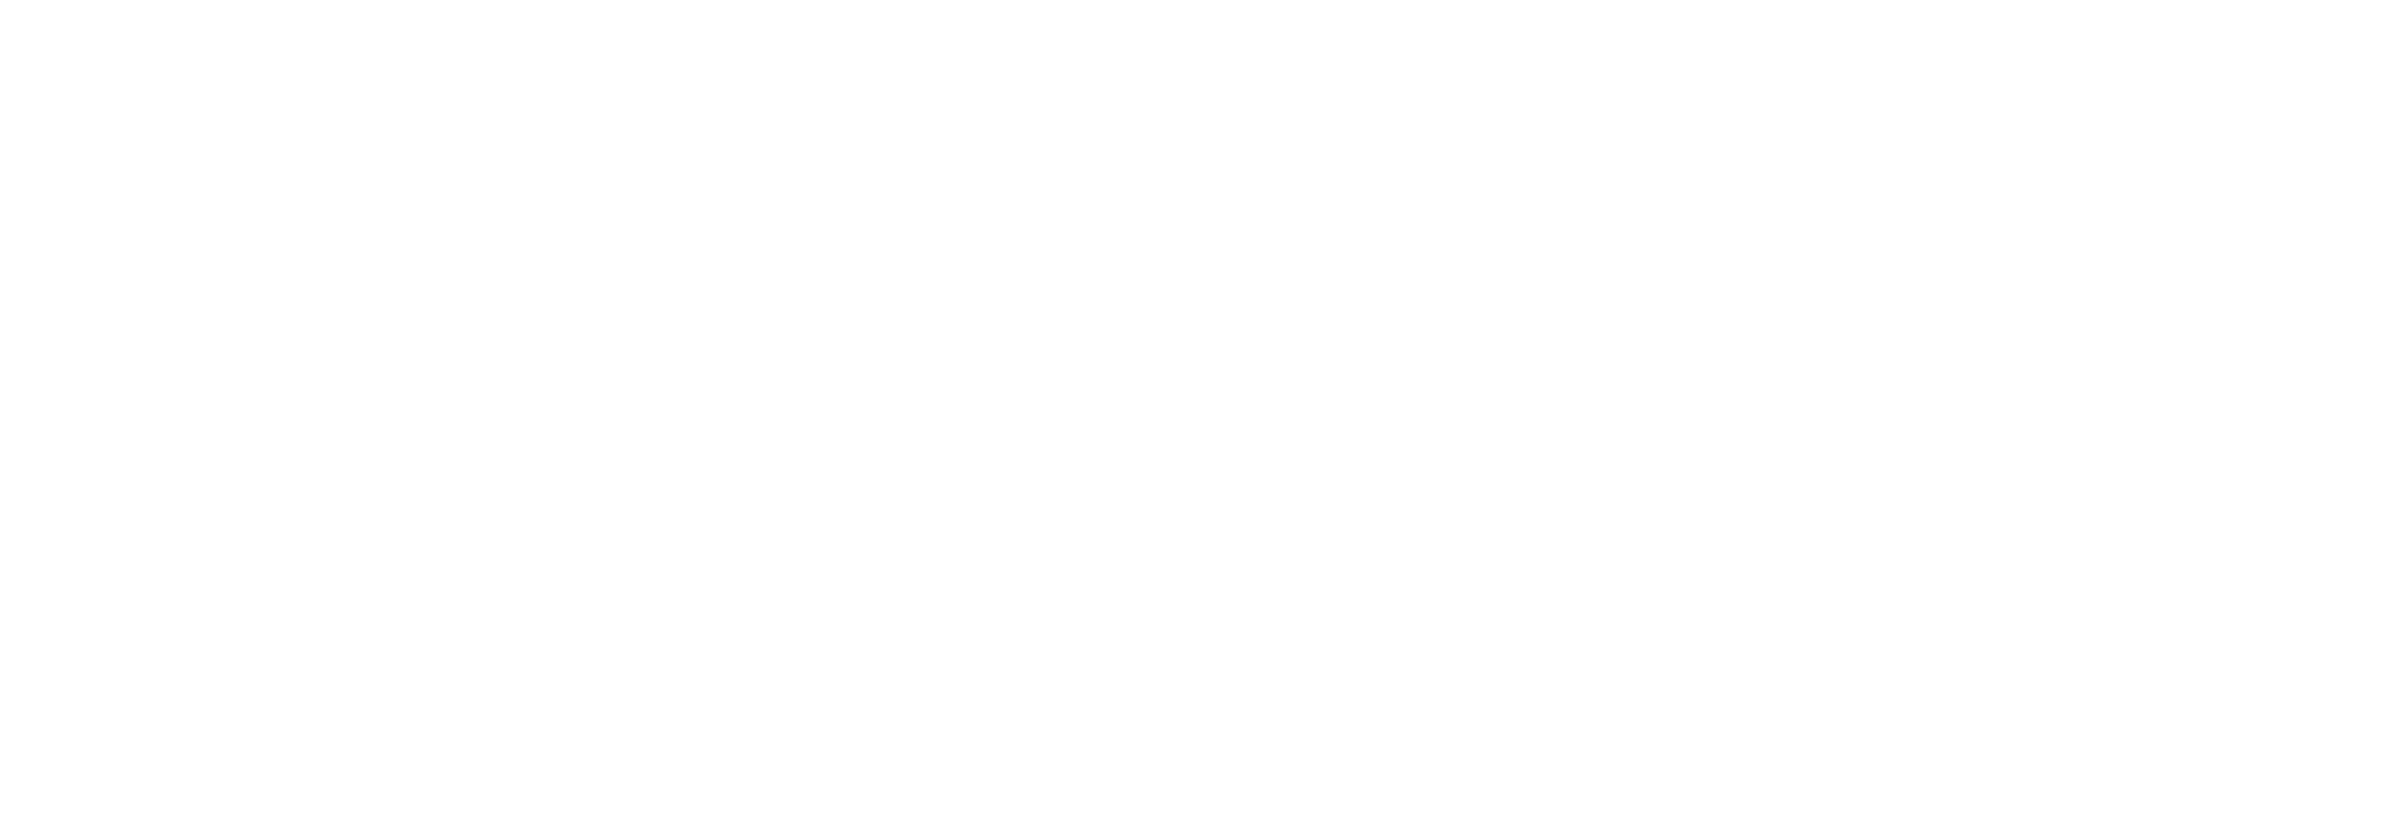 Ergotopia Logo weiß